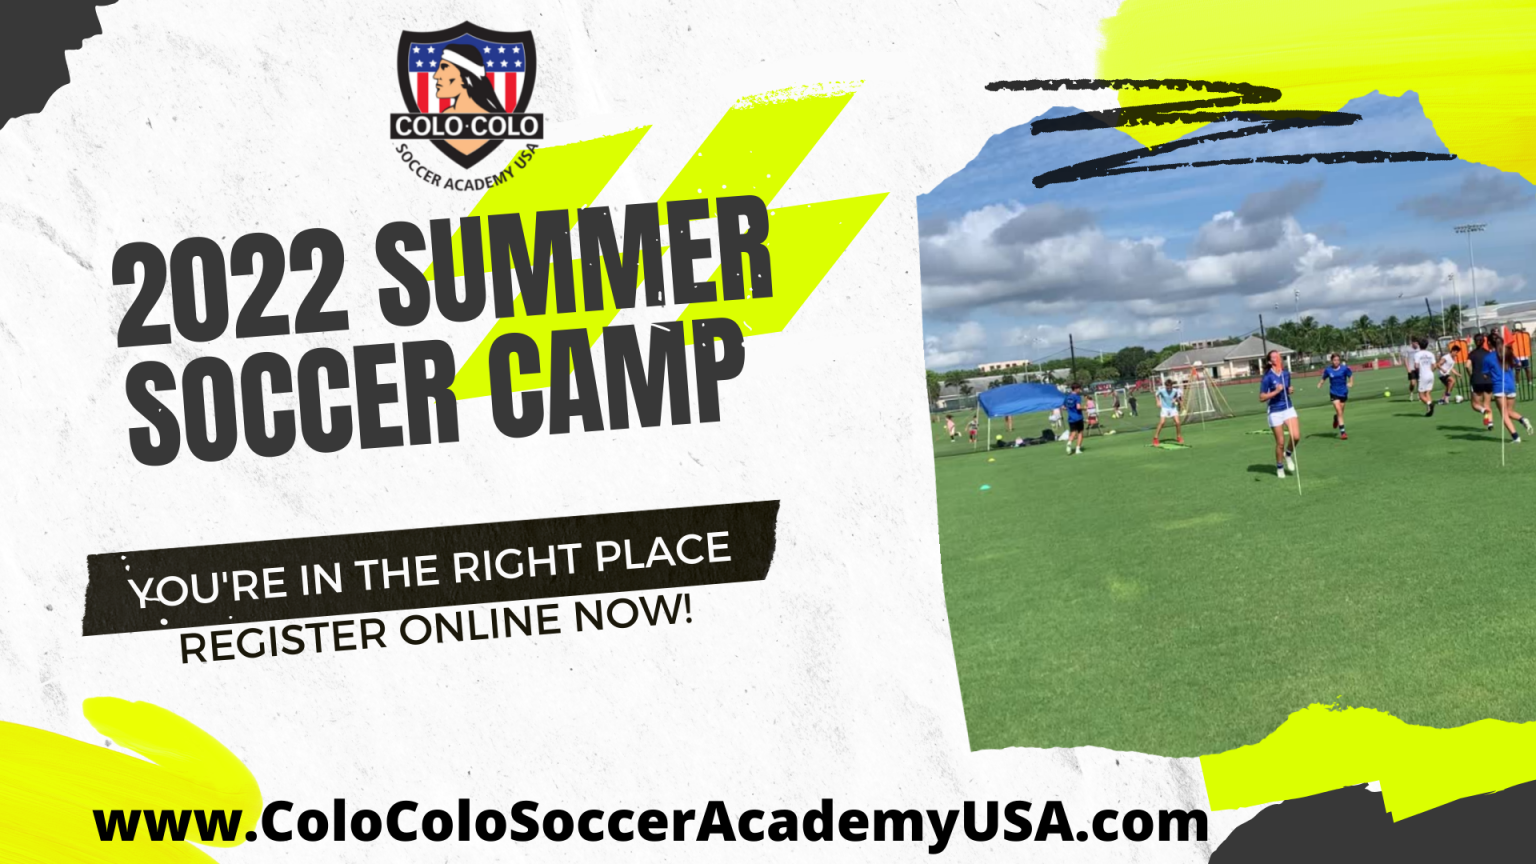 2022 Summer Soccer Camp – Colo Colo Soccer Academy